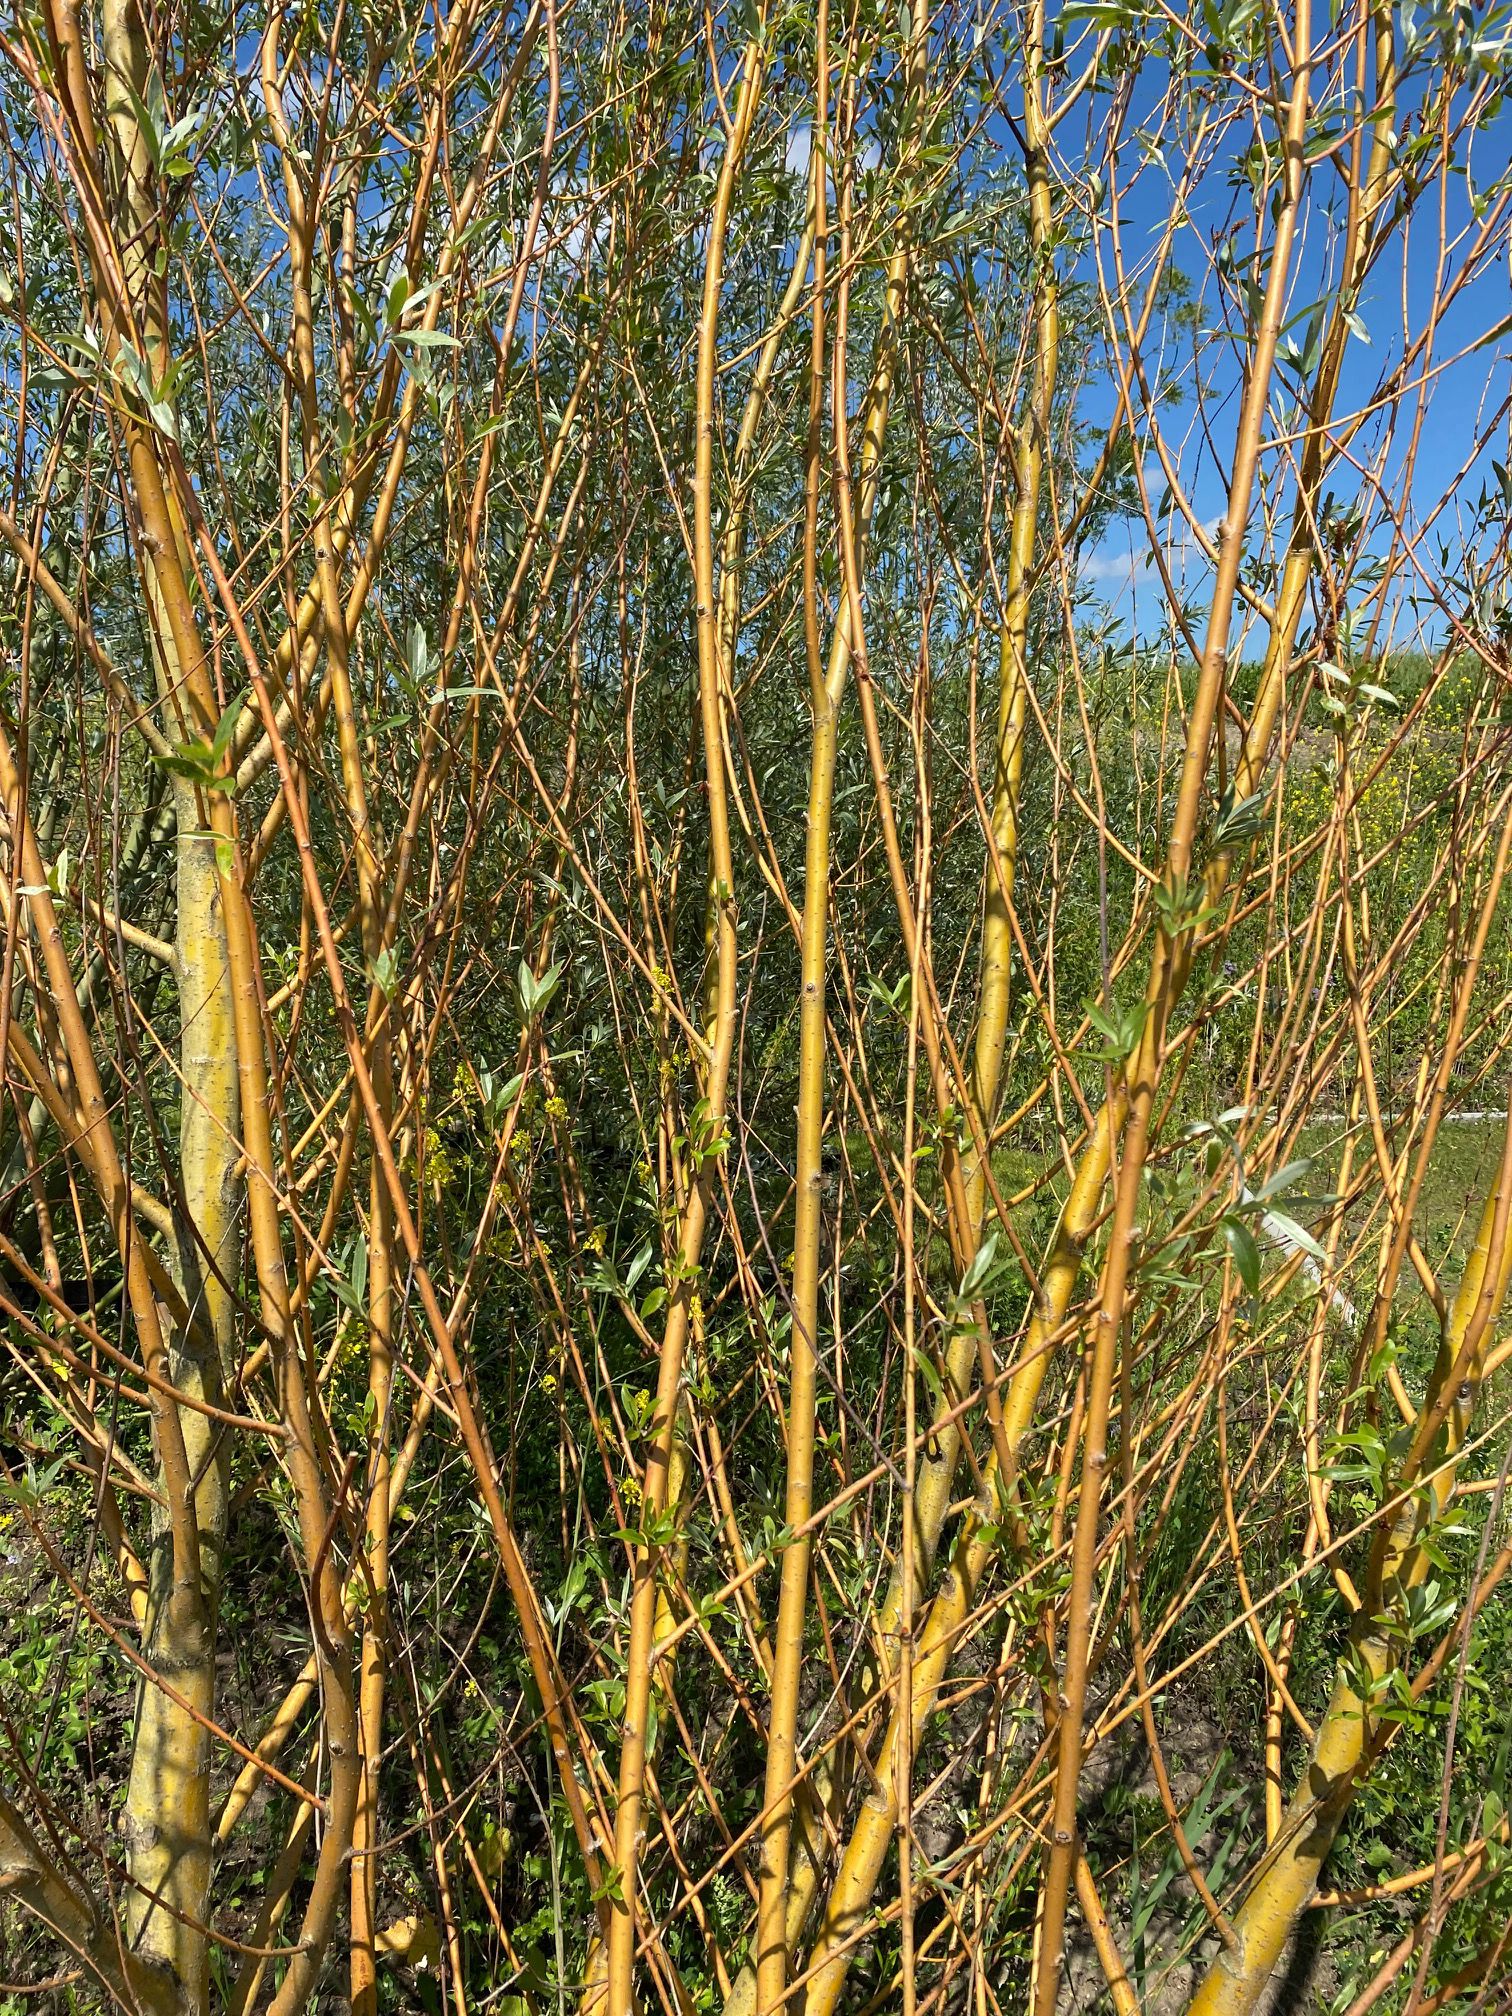 Weiße Weide - Salix alba 'Chermesina'